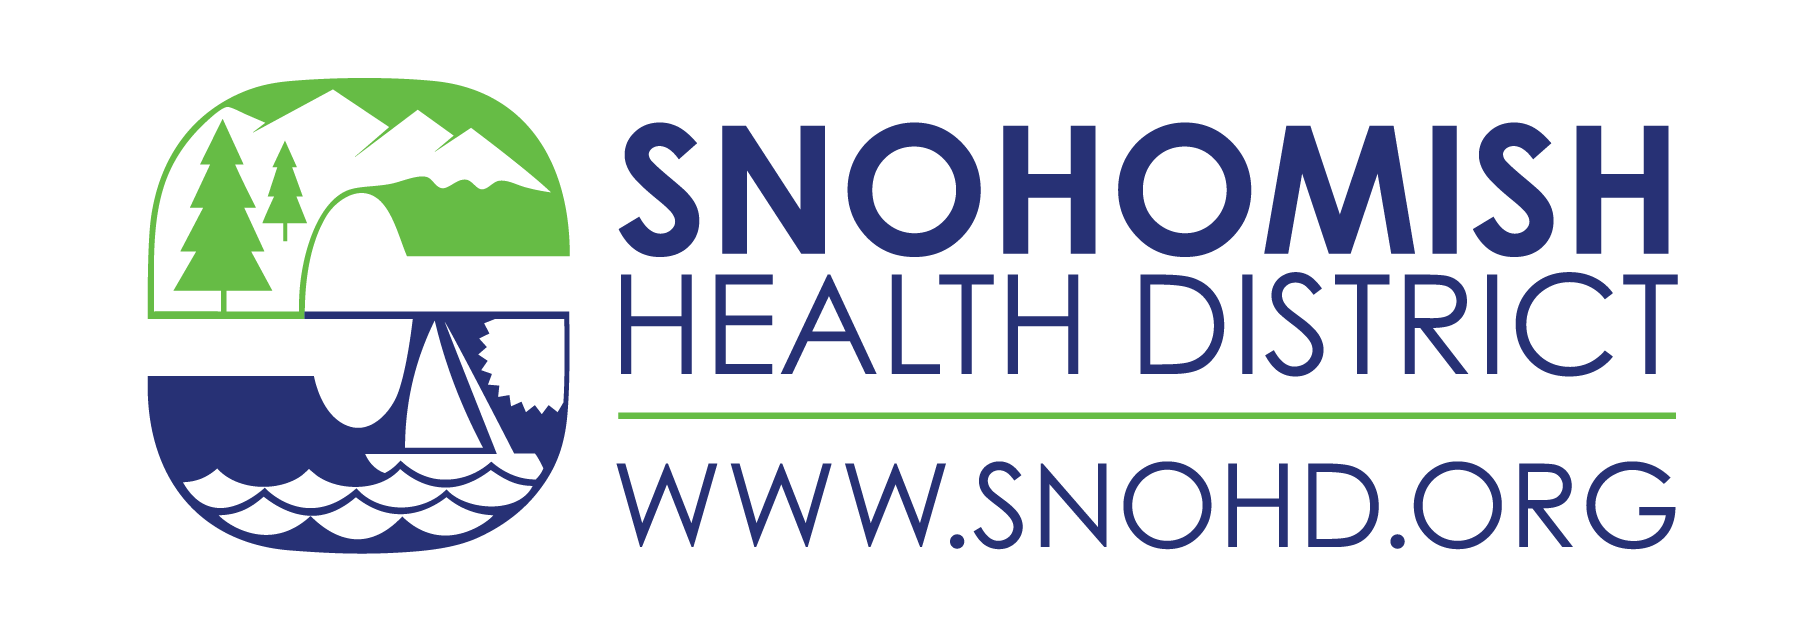 Snohomish Health District Testing Site - Boom City - Symptoms Logo